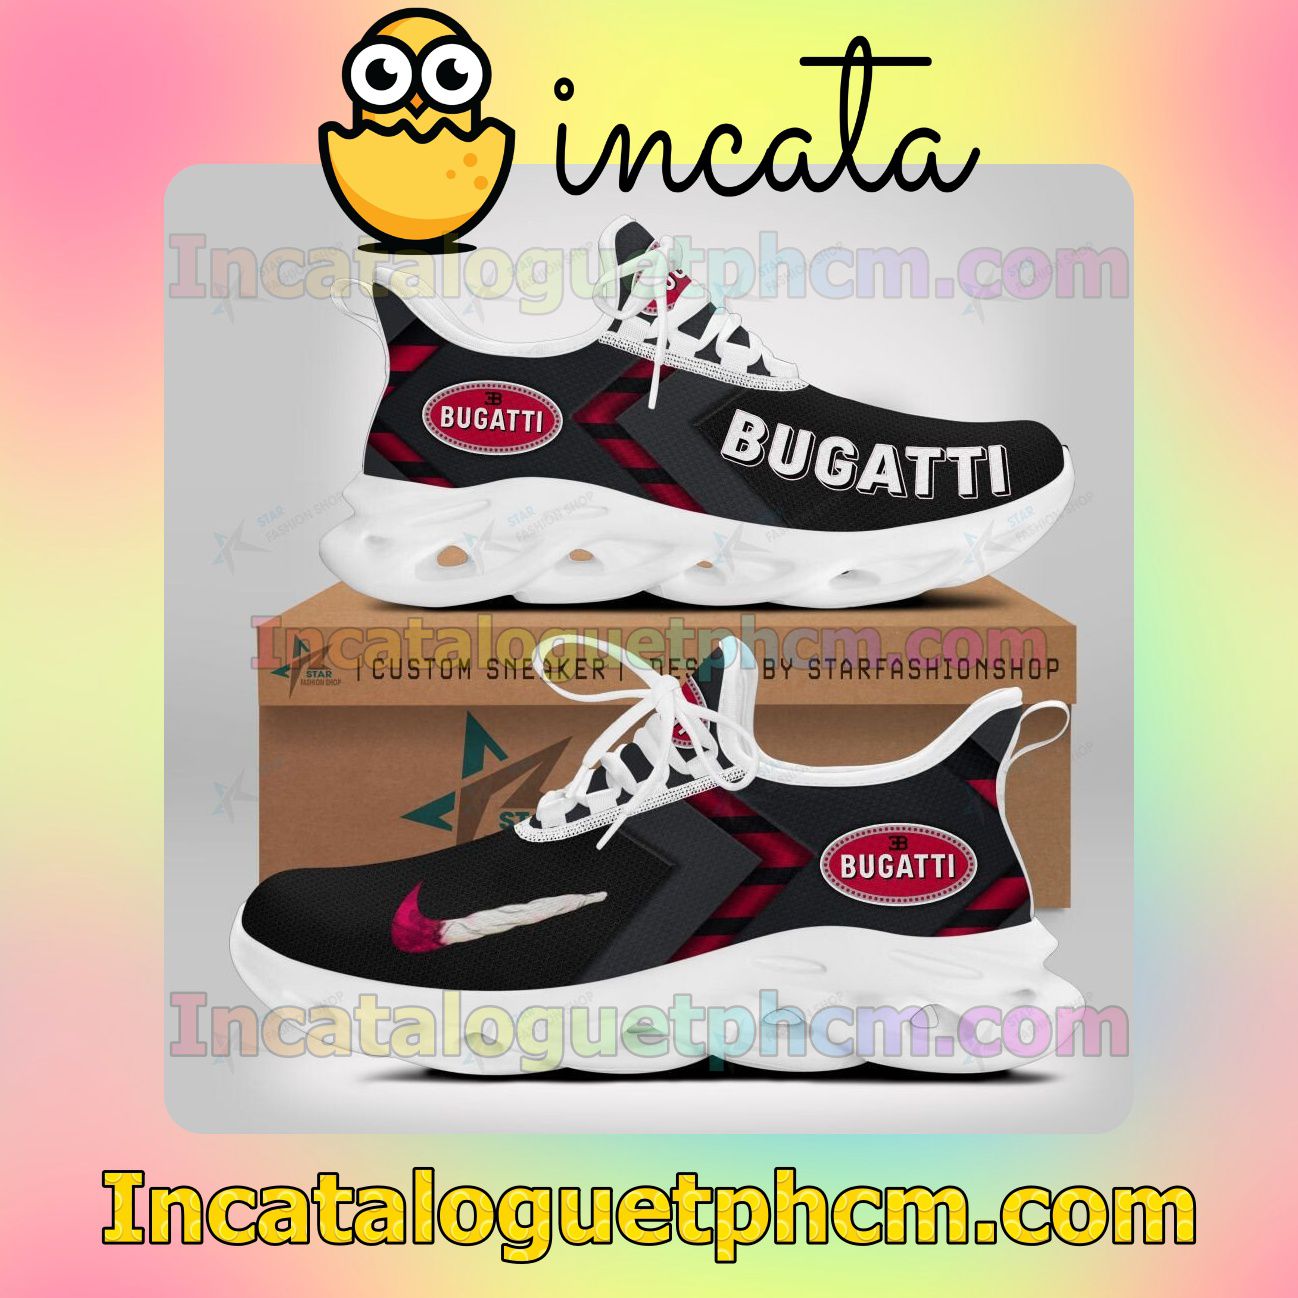 Sale Off Bugati Women Fashion Sneakers